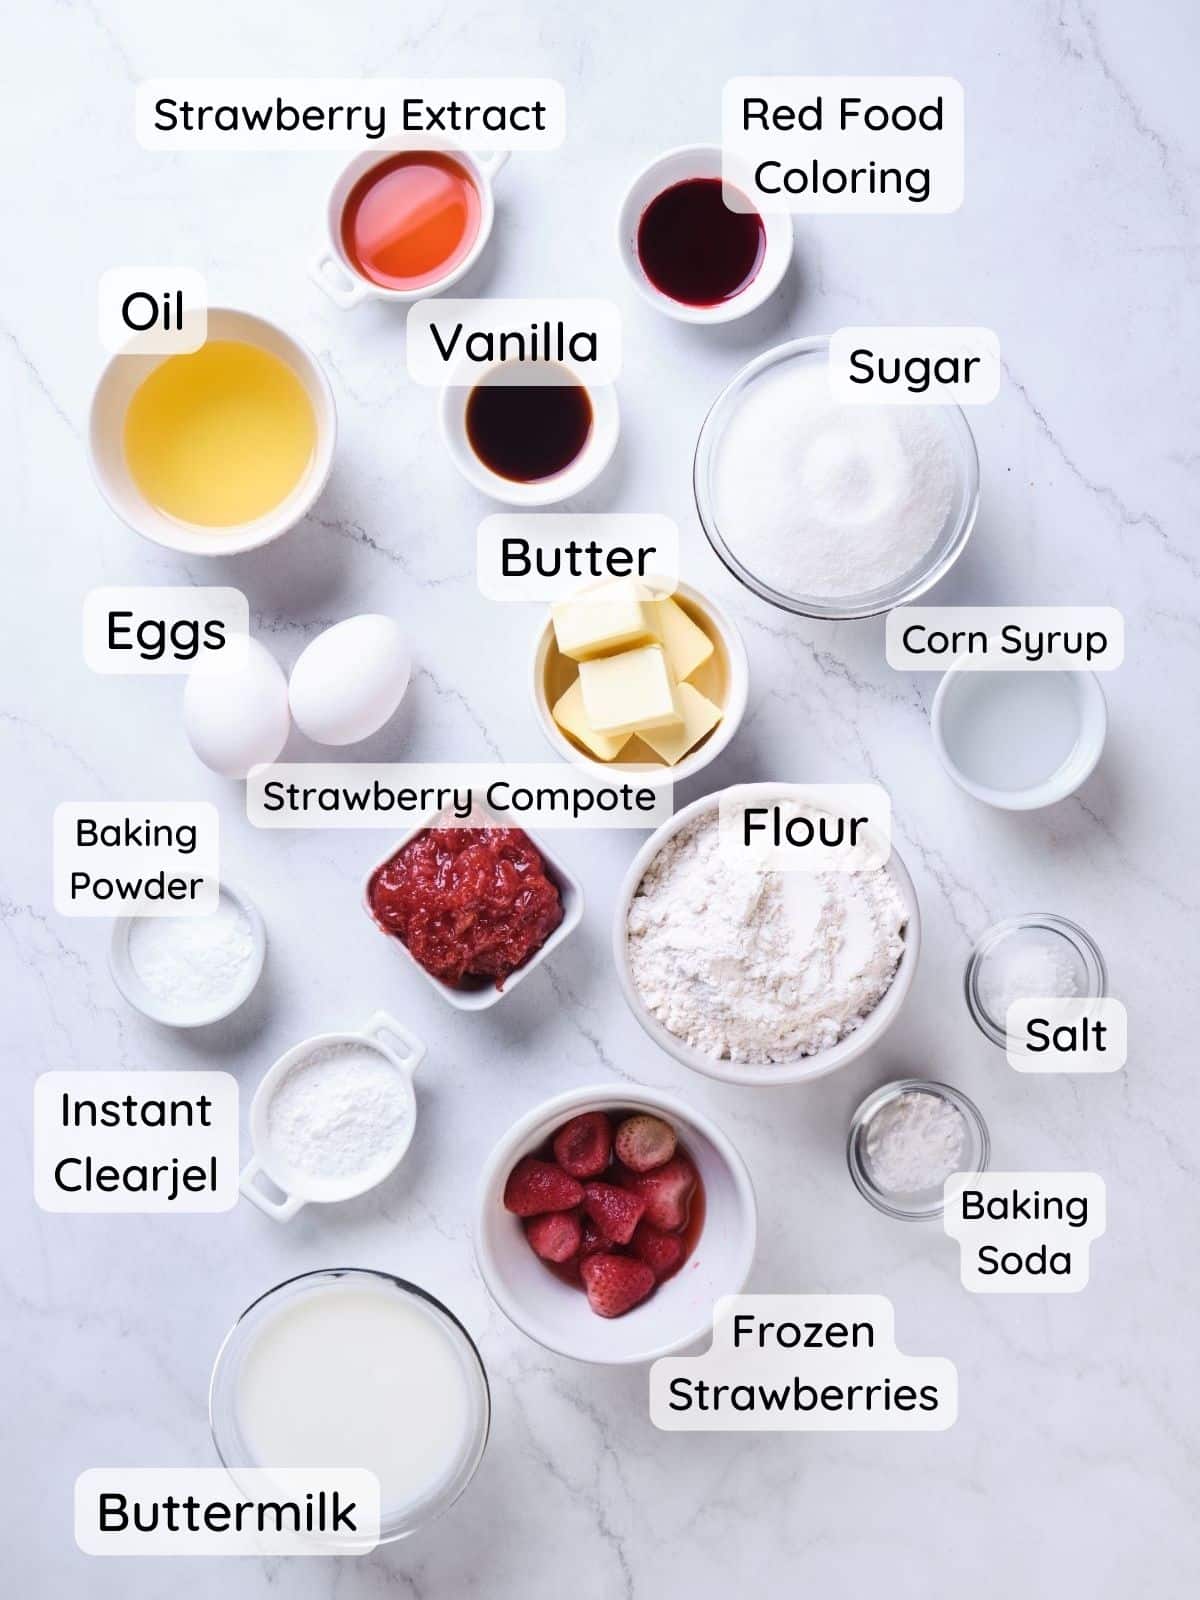 10 Best Strawberry Extract Cake Recipes | Yummly